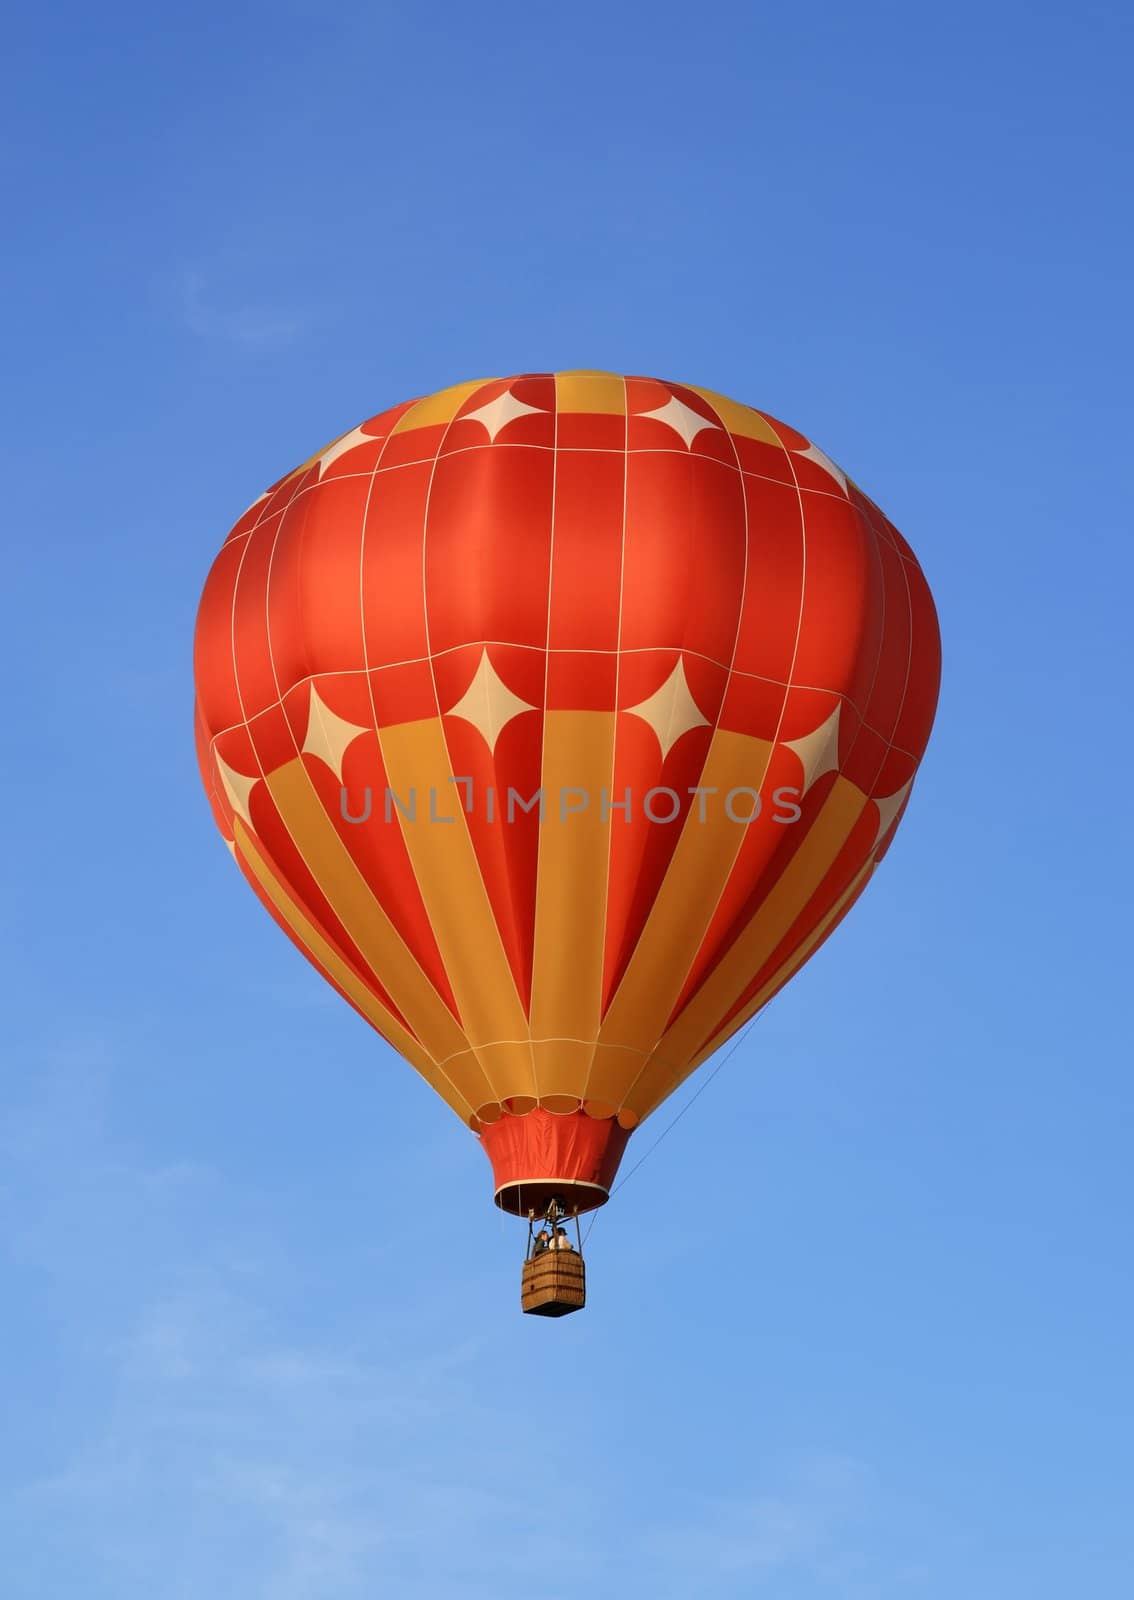 Red and orange hot air balloon by anikasalsera